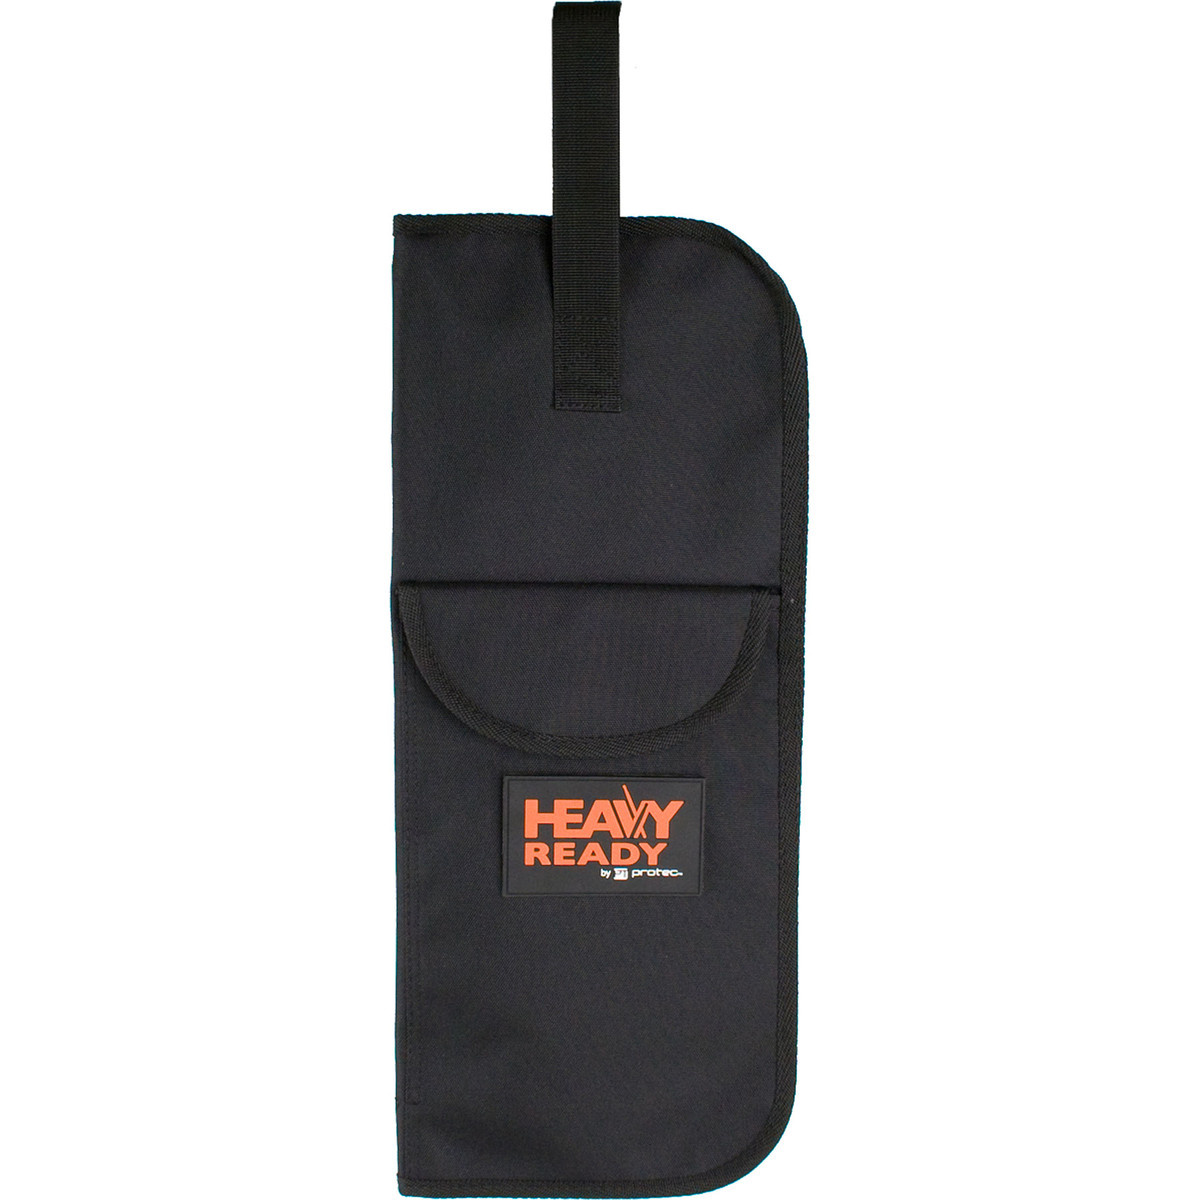 Protec HR337 Heavy Ready Stick/Mallet Bag - Horn Stash